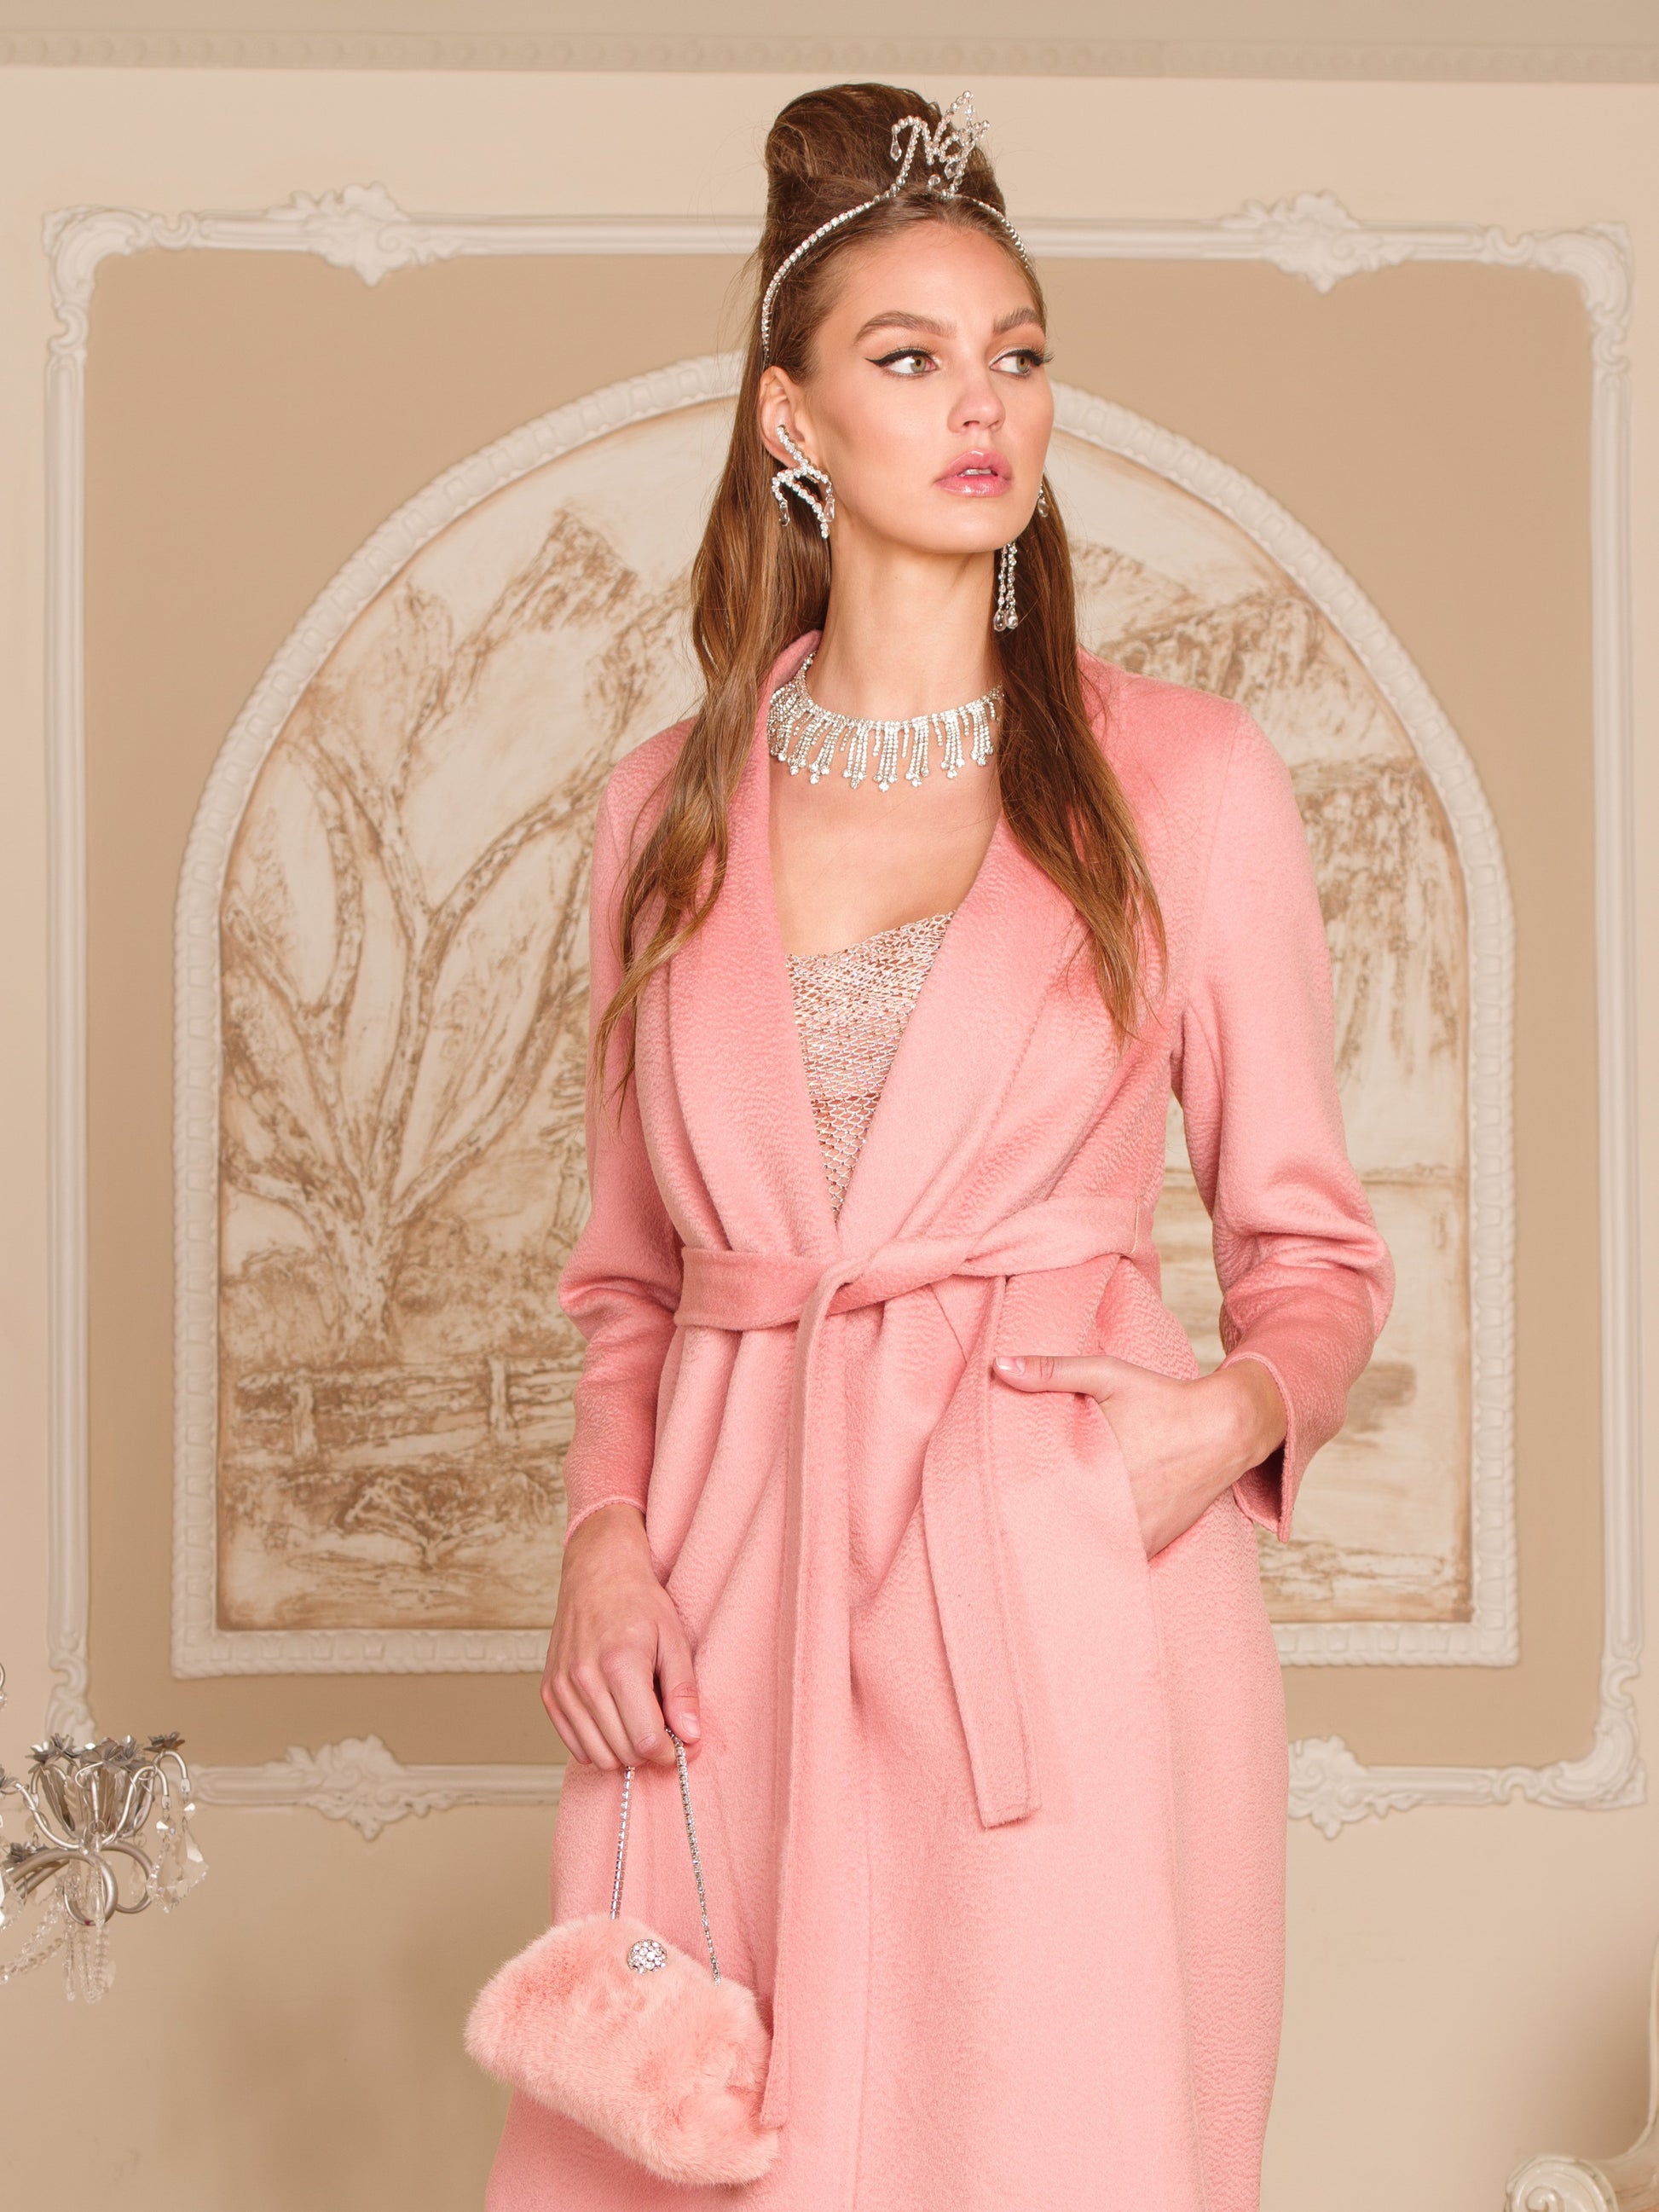 Pink Diana Coat - Nana Jacqueline